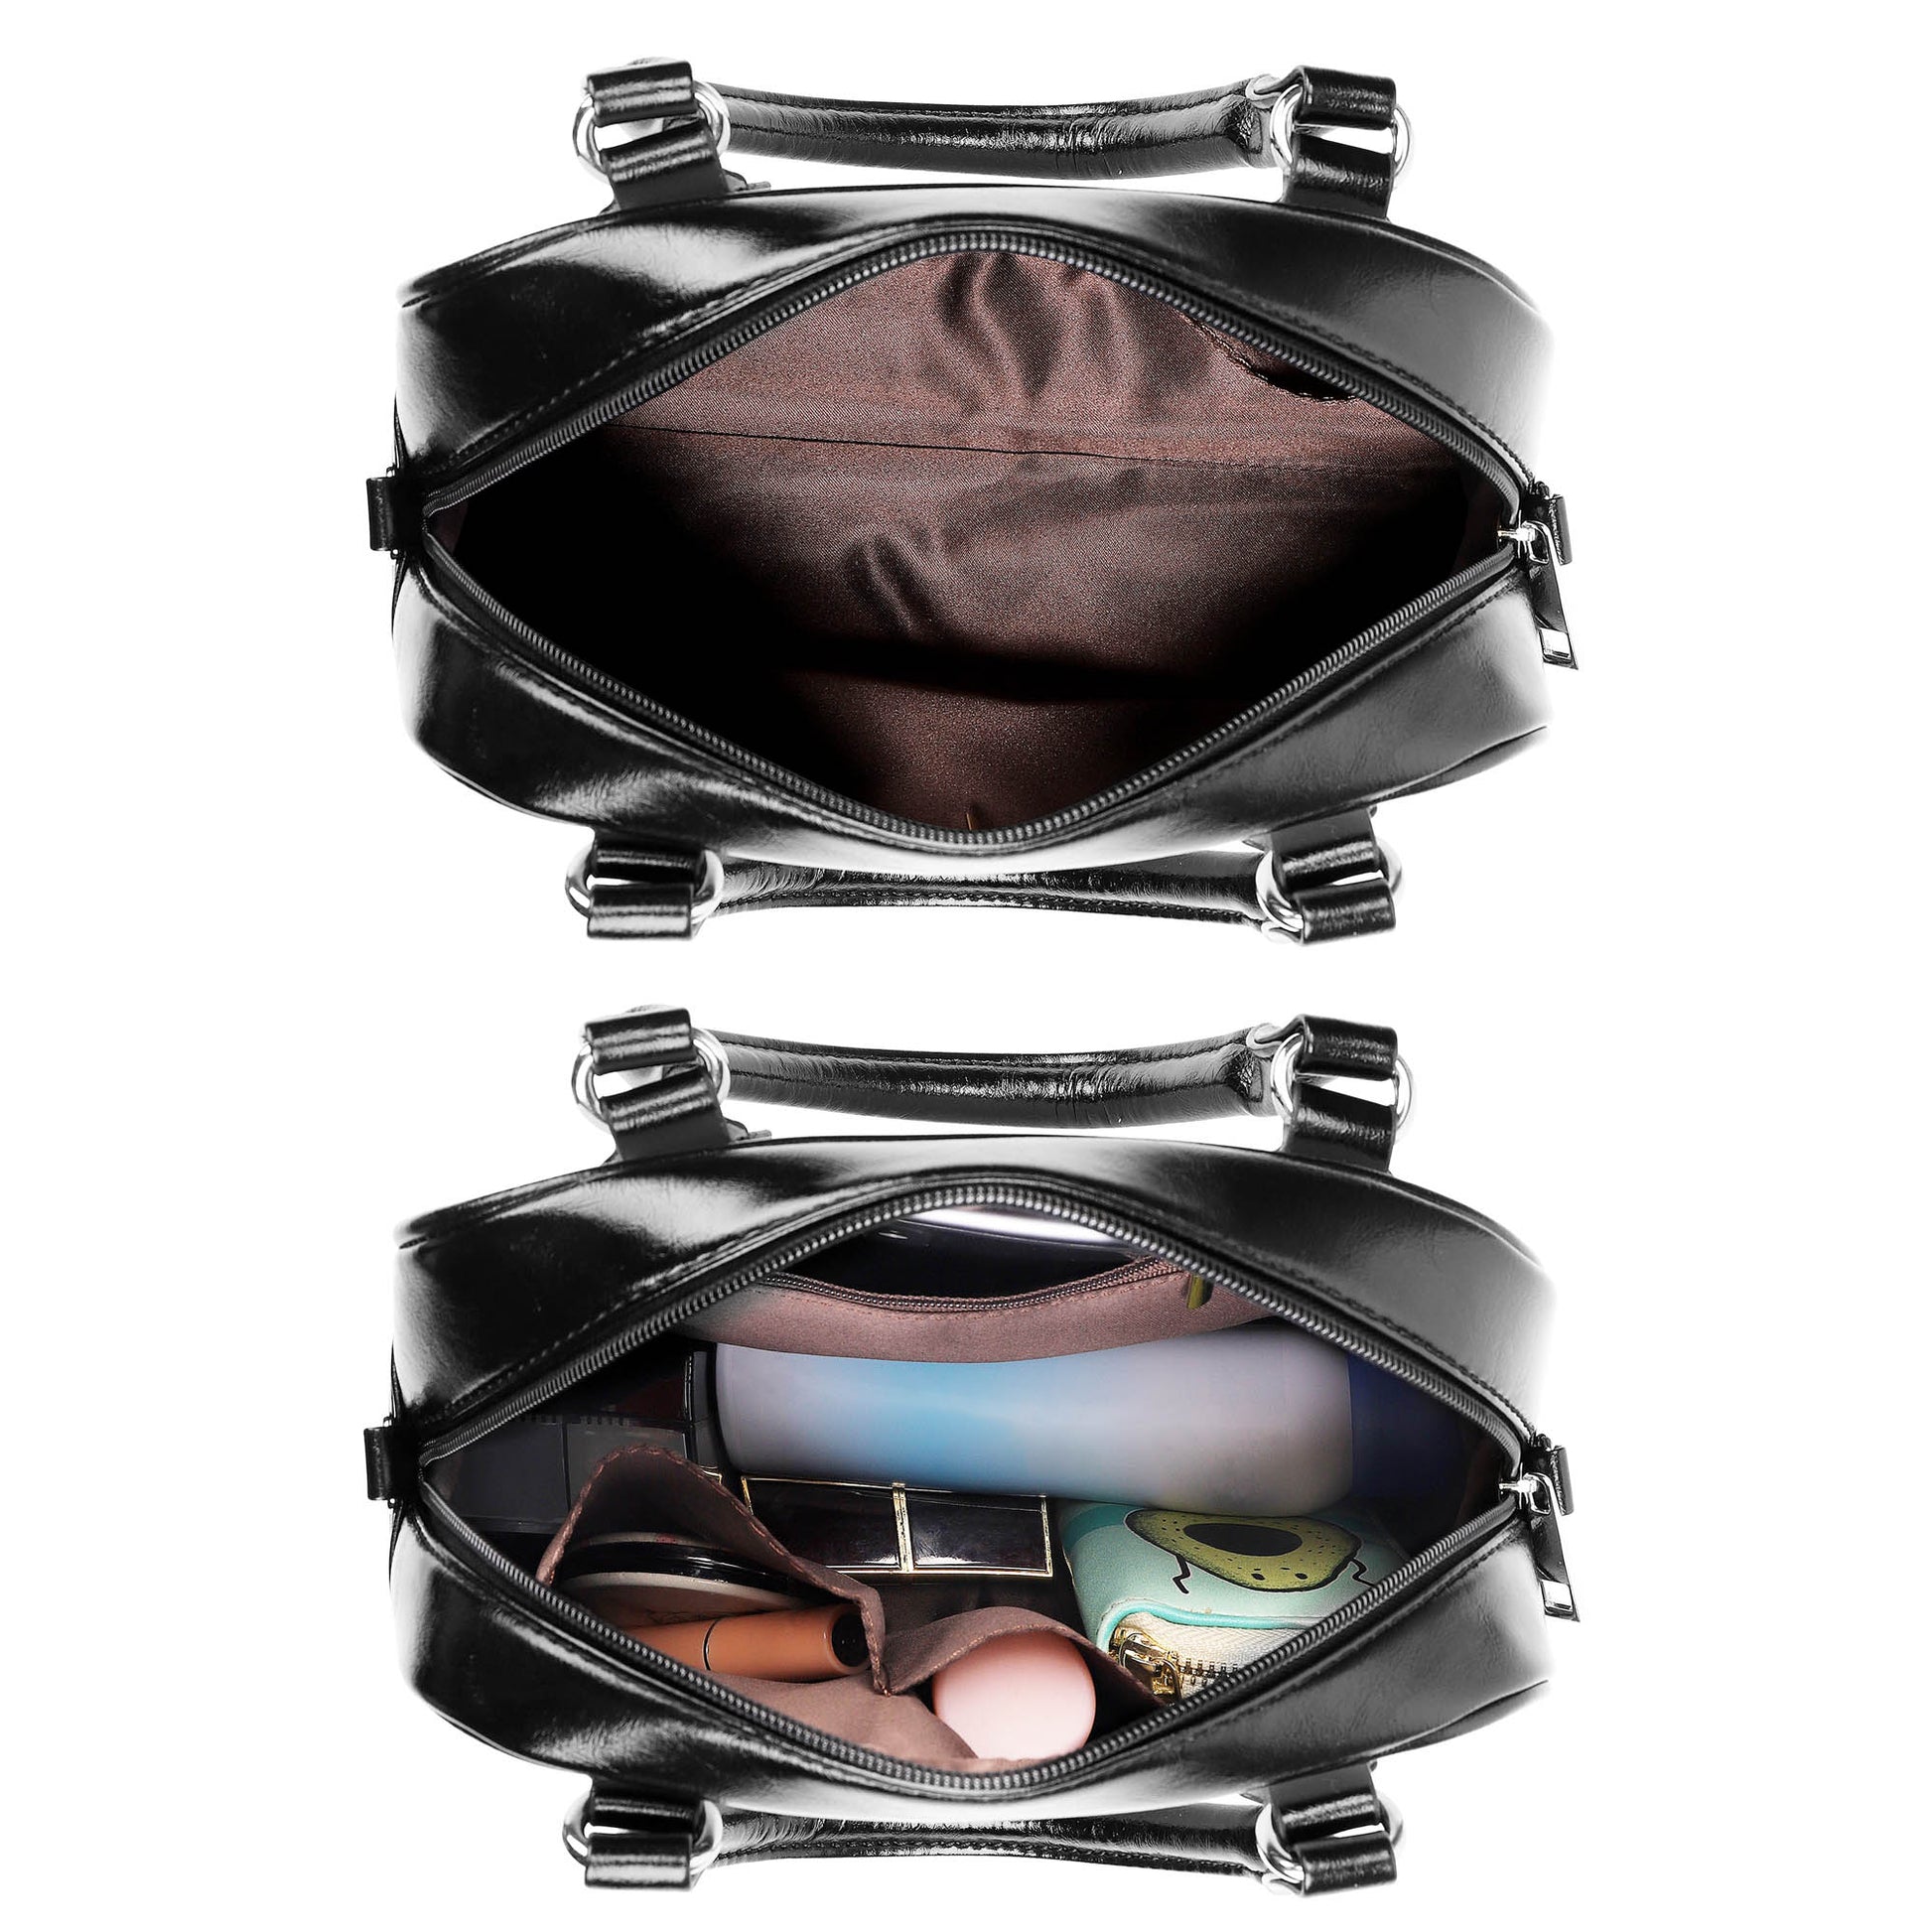 Livingston Modern Tartan Shoulder Handbags with Family Crest - Tartanvibesclothing